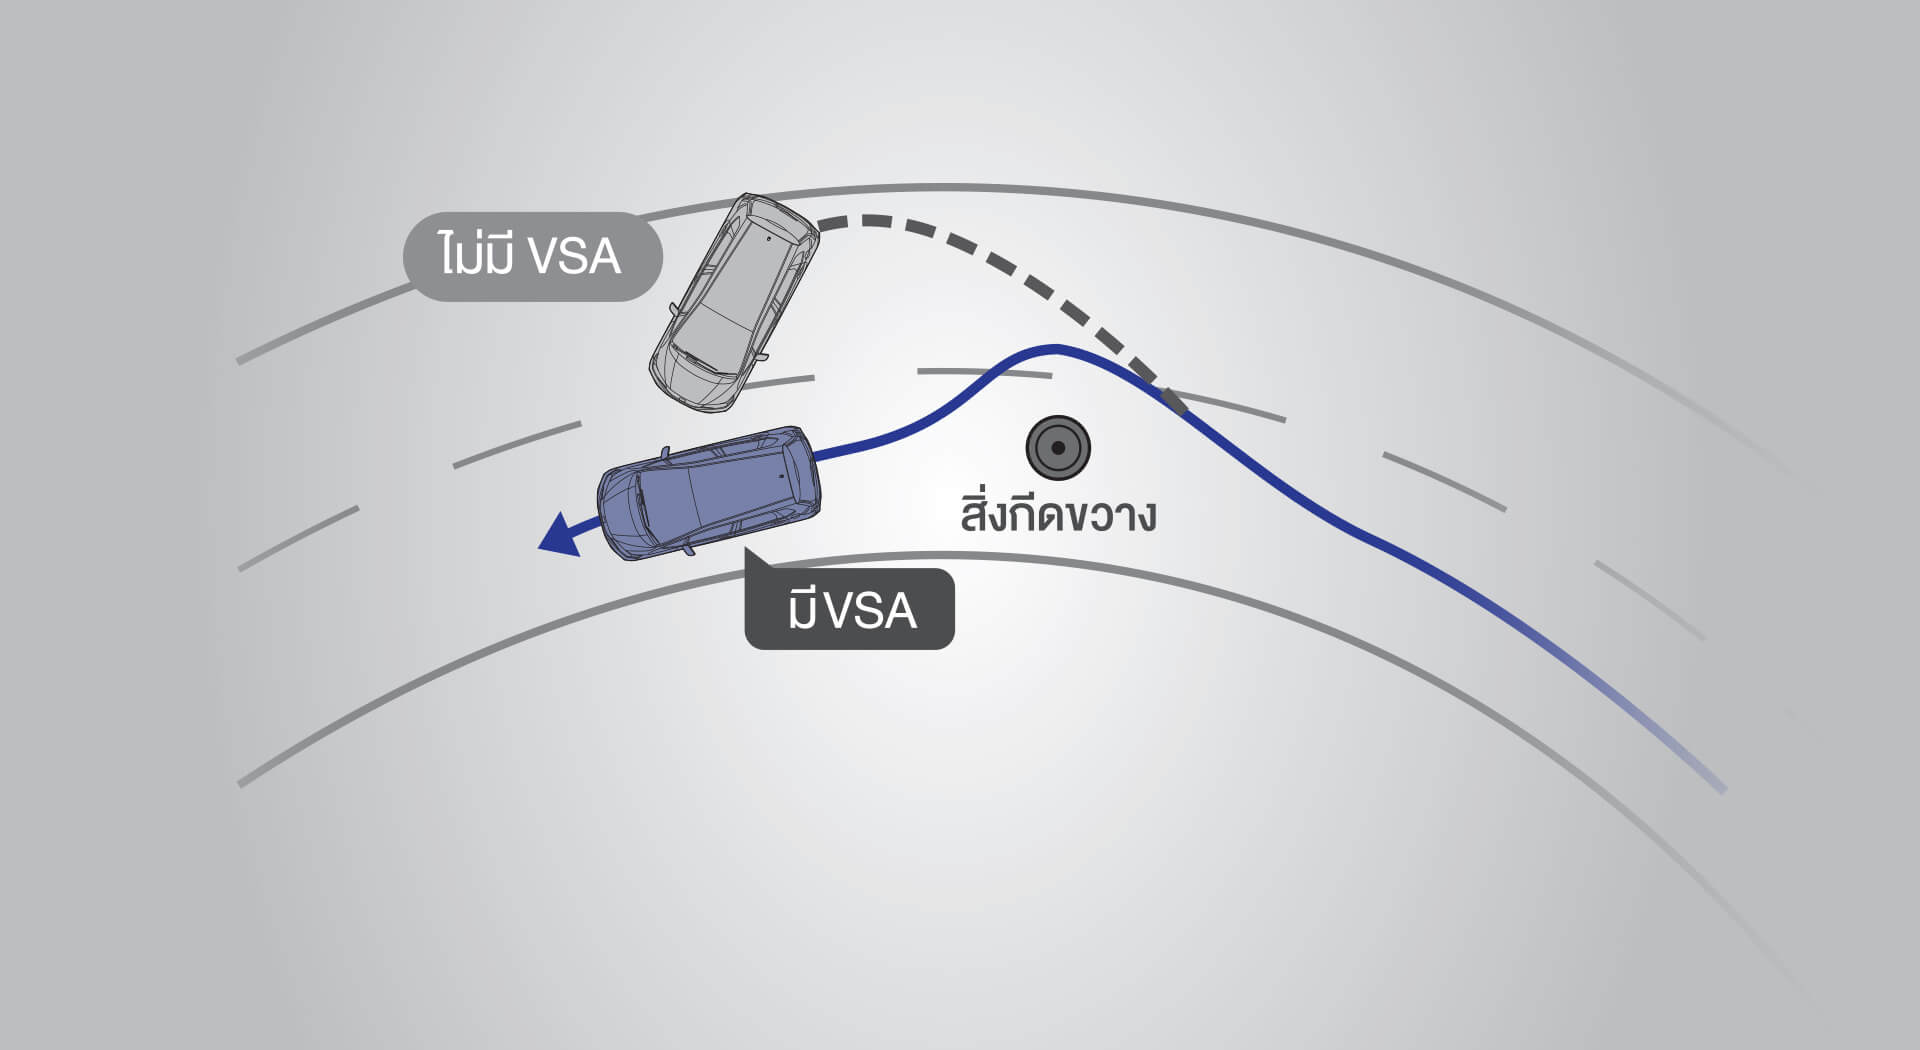 Vehicle Stability Assist (VSA) ระบบช่วยควบคุมการทรงตัวขณะเข้าโค้ง เพิ่มการยึดเกาะถนน มั่นคงทุกการขับเคลื่อน